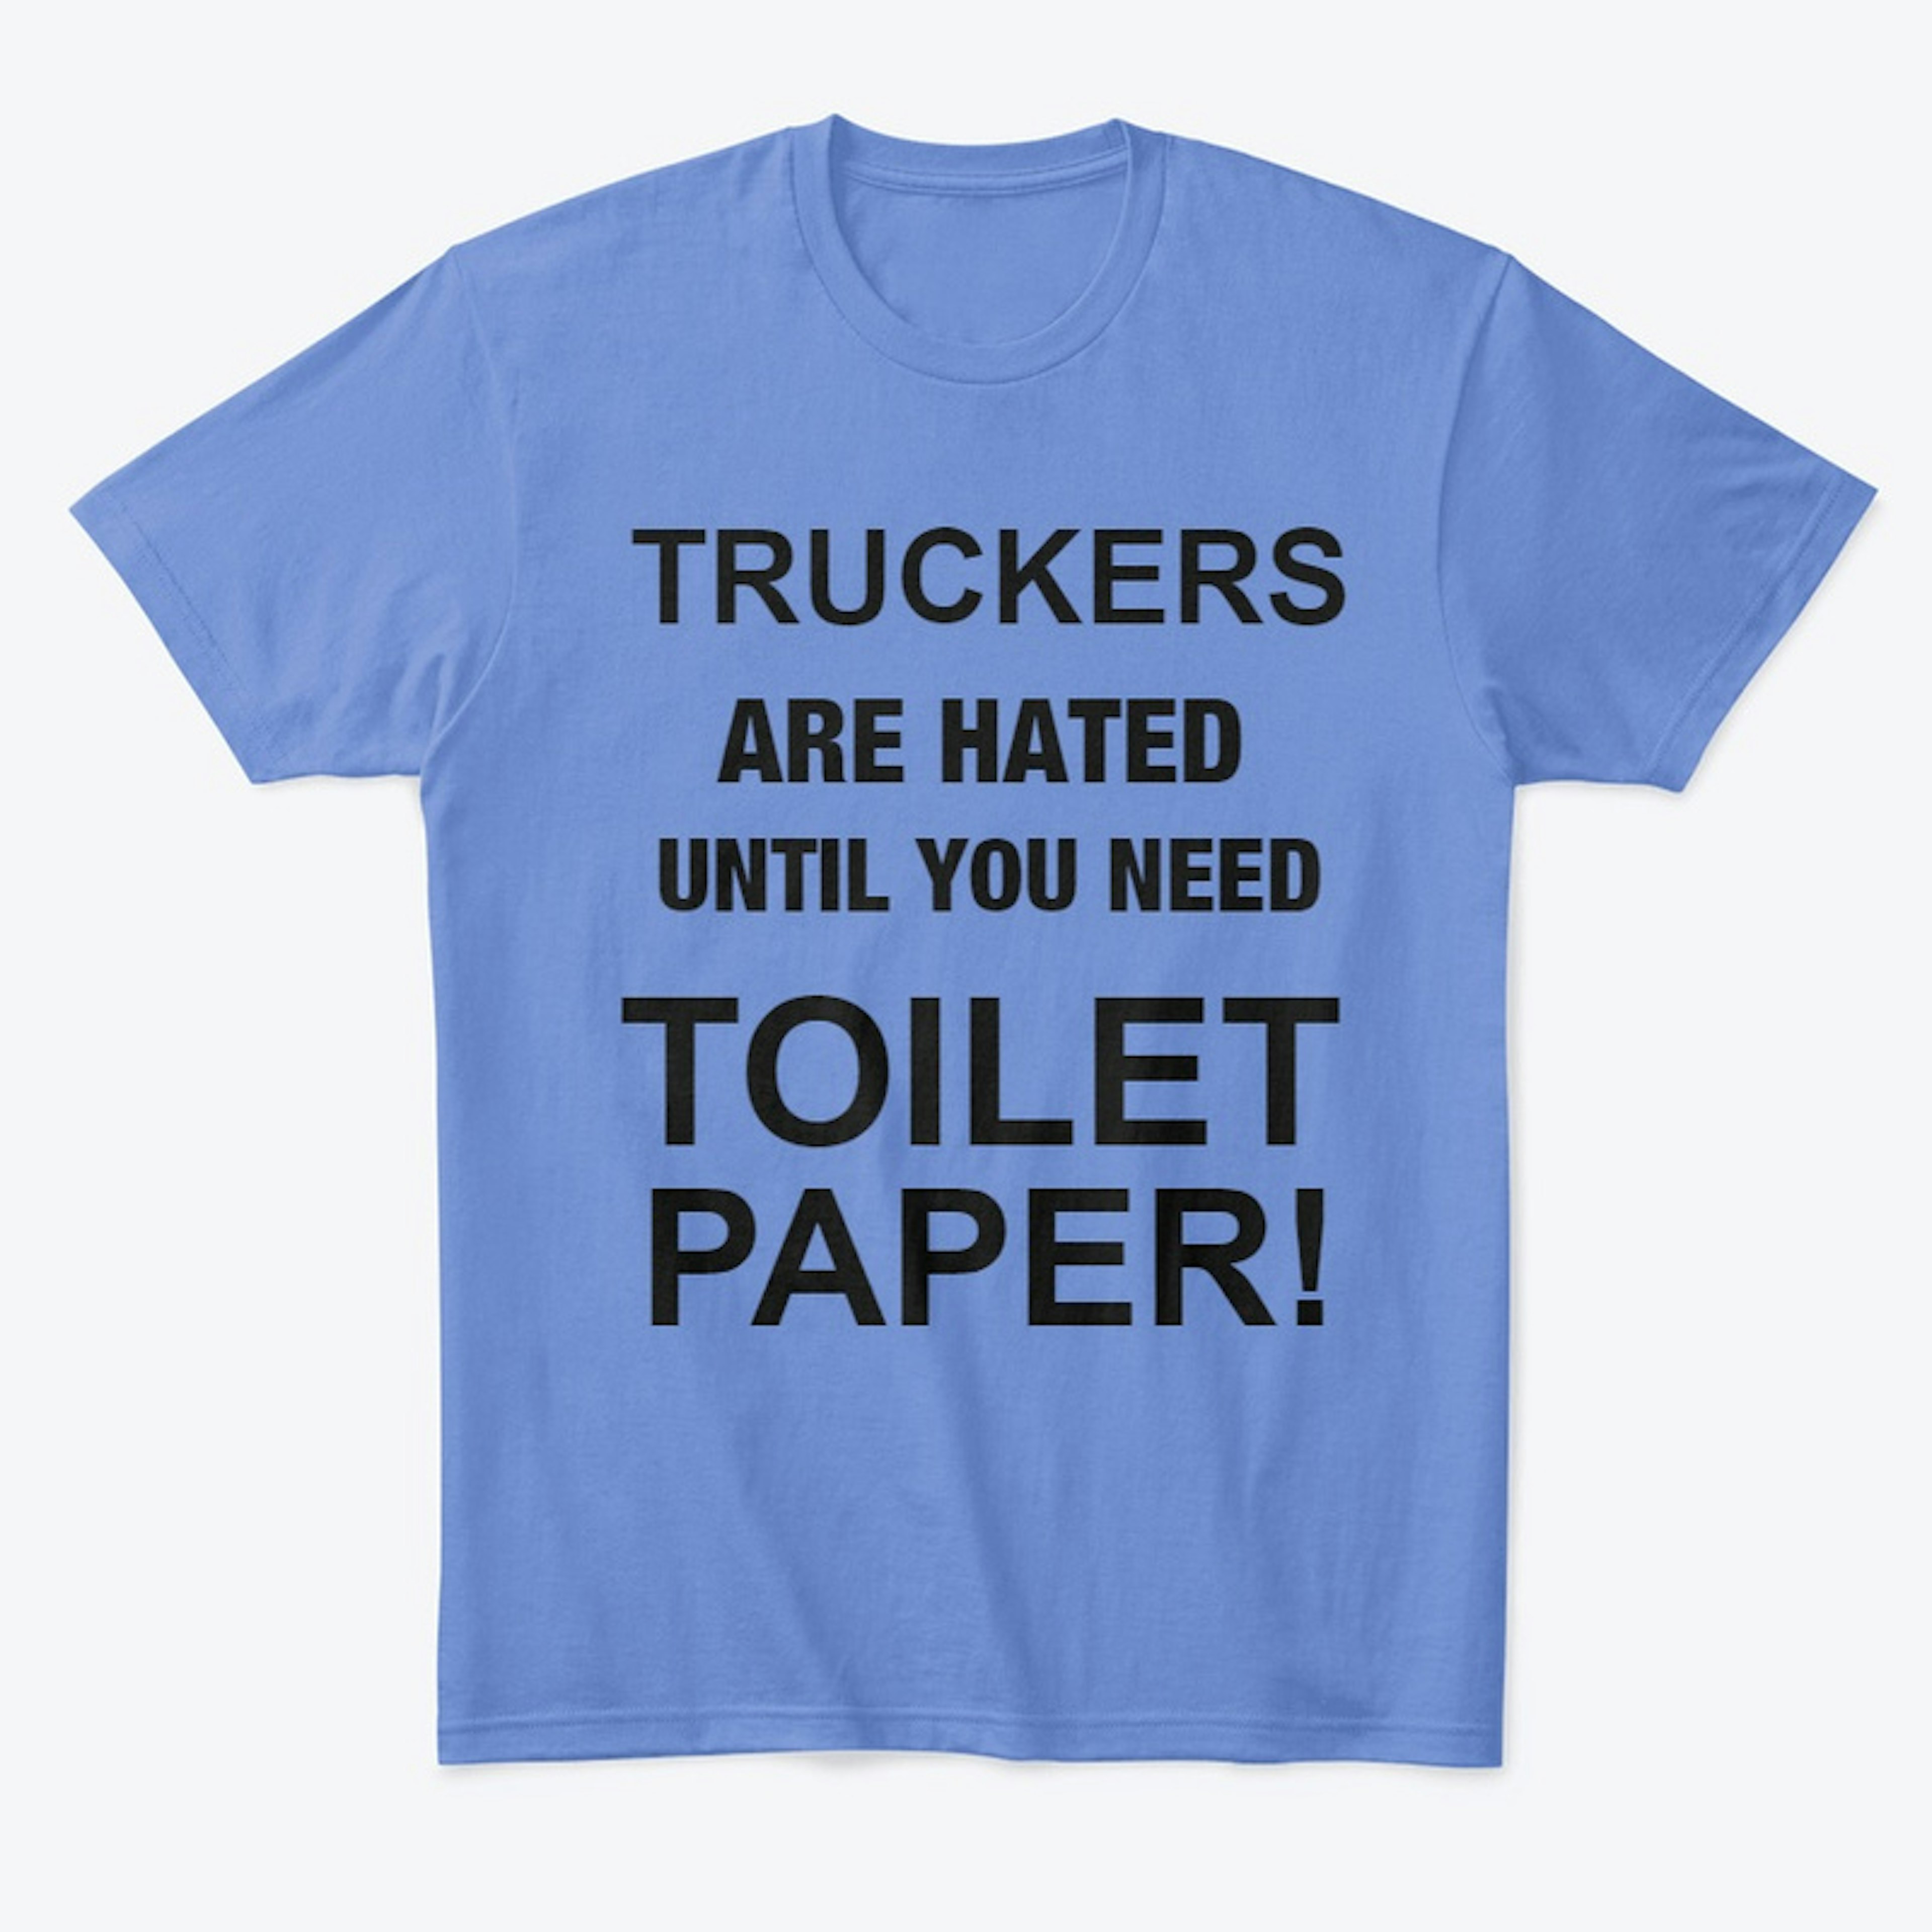 Truckers bring paper